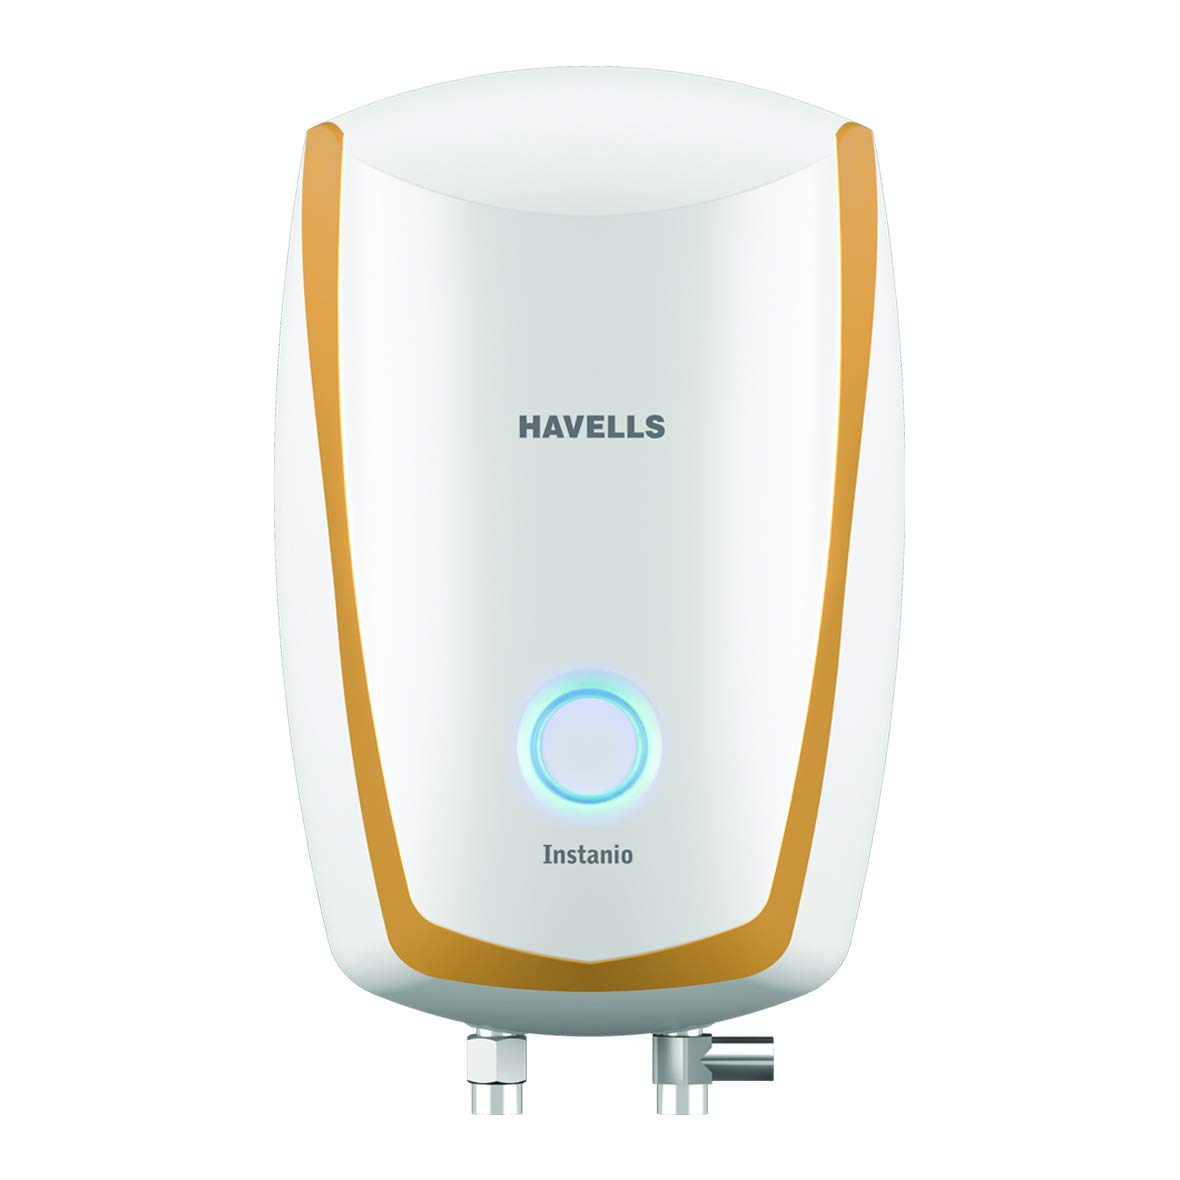 Havells Instanio 3-Litre Instant Water Heater